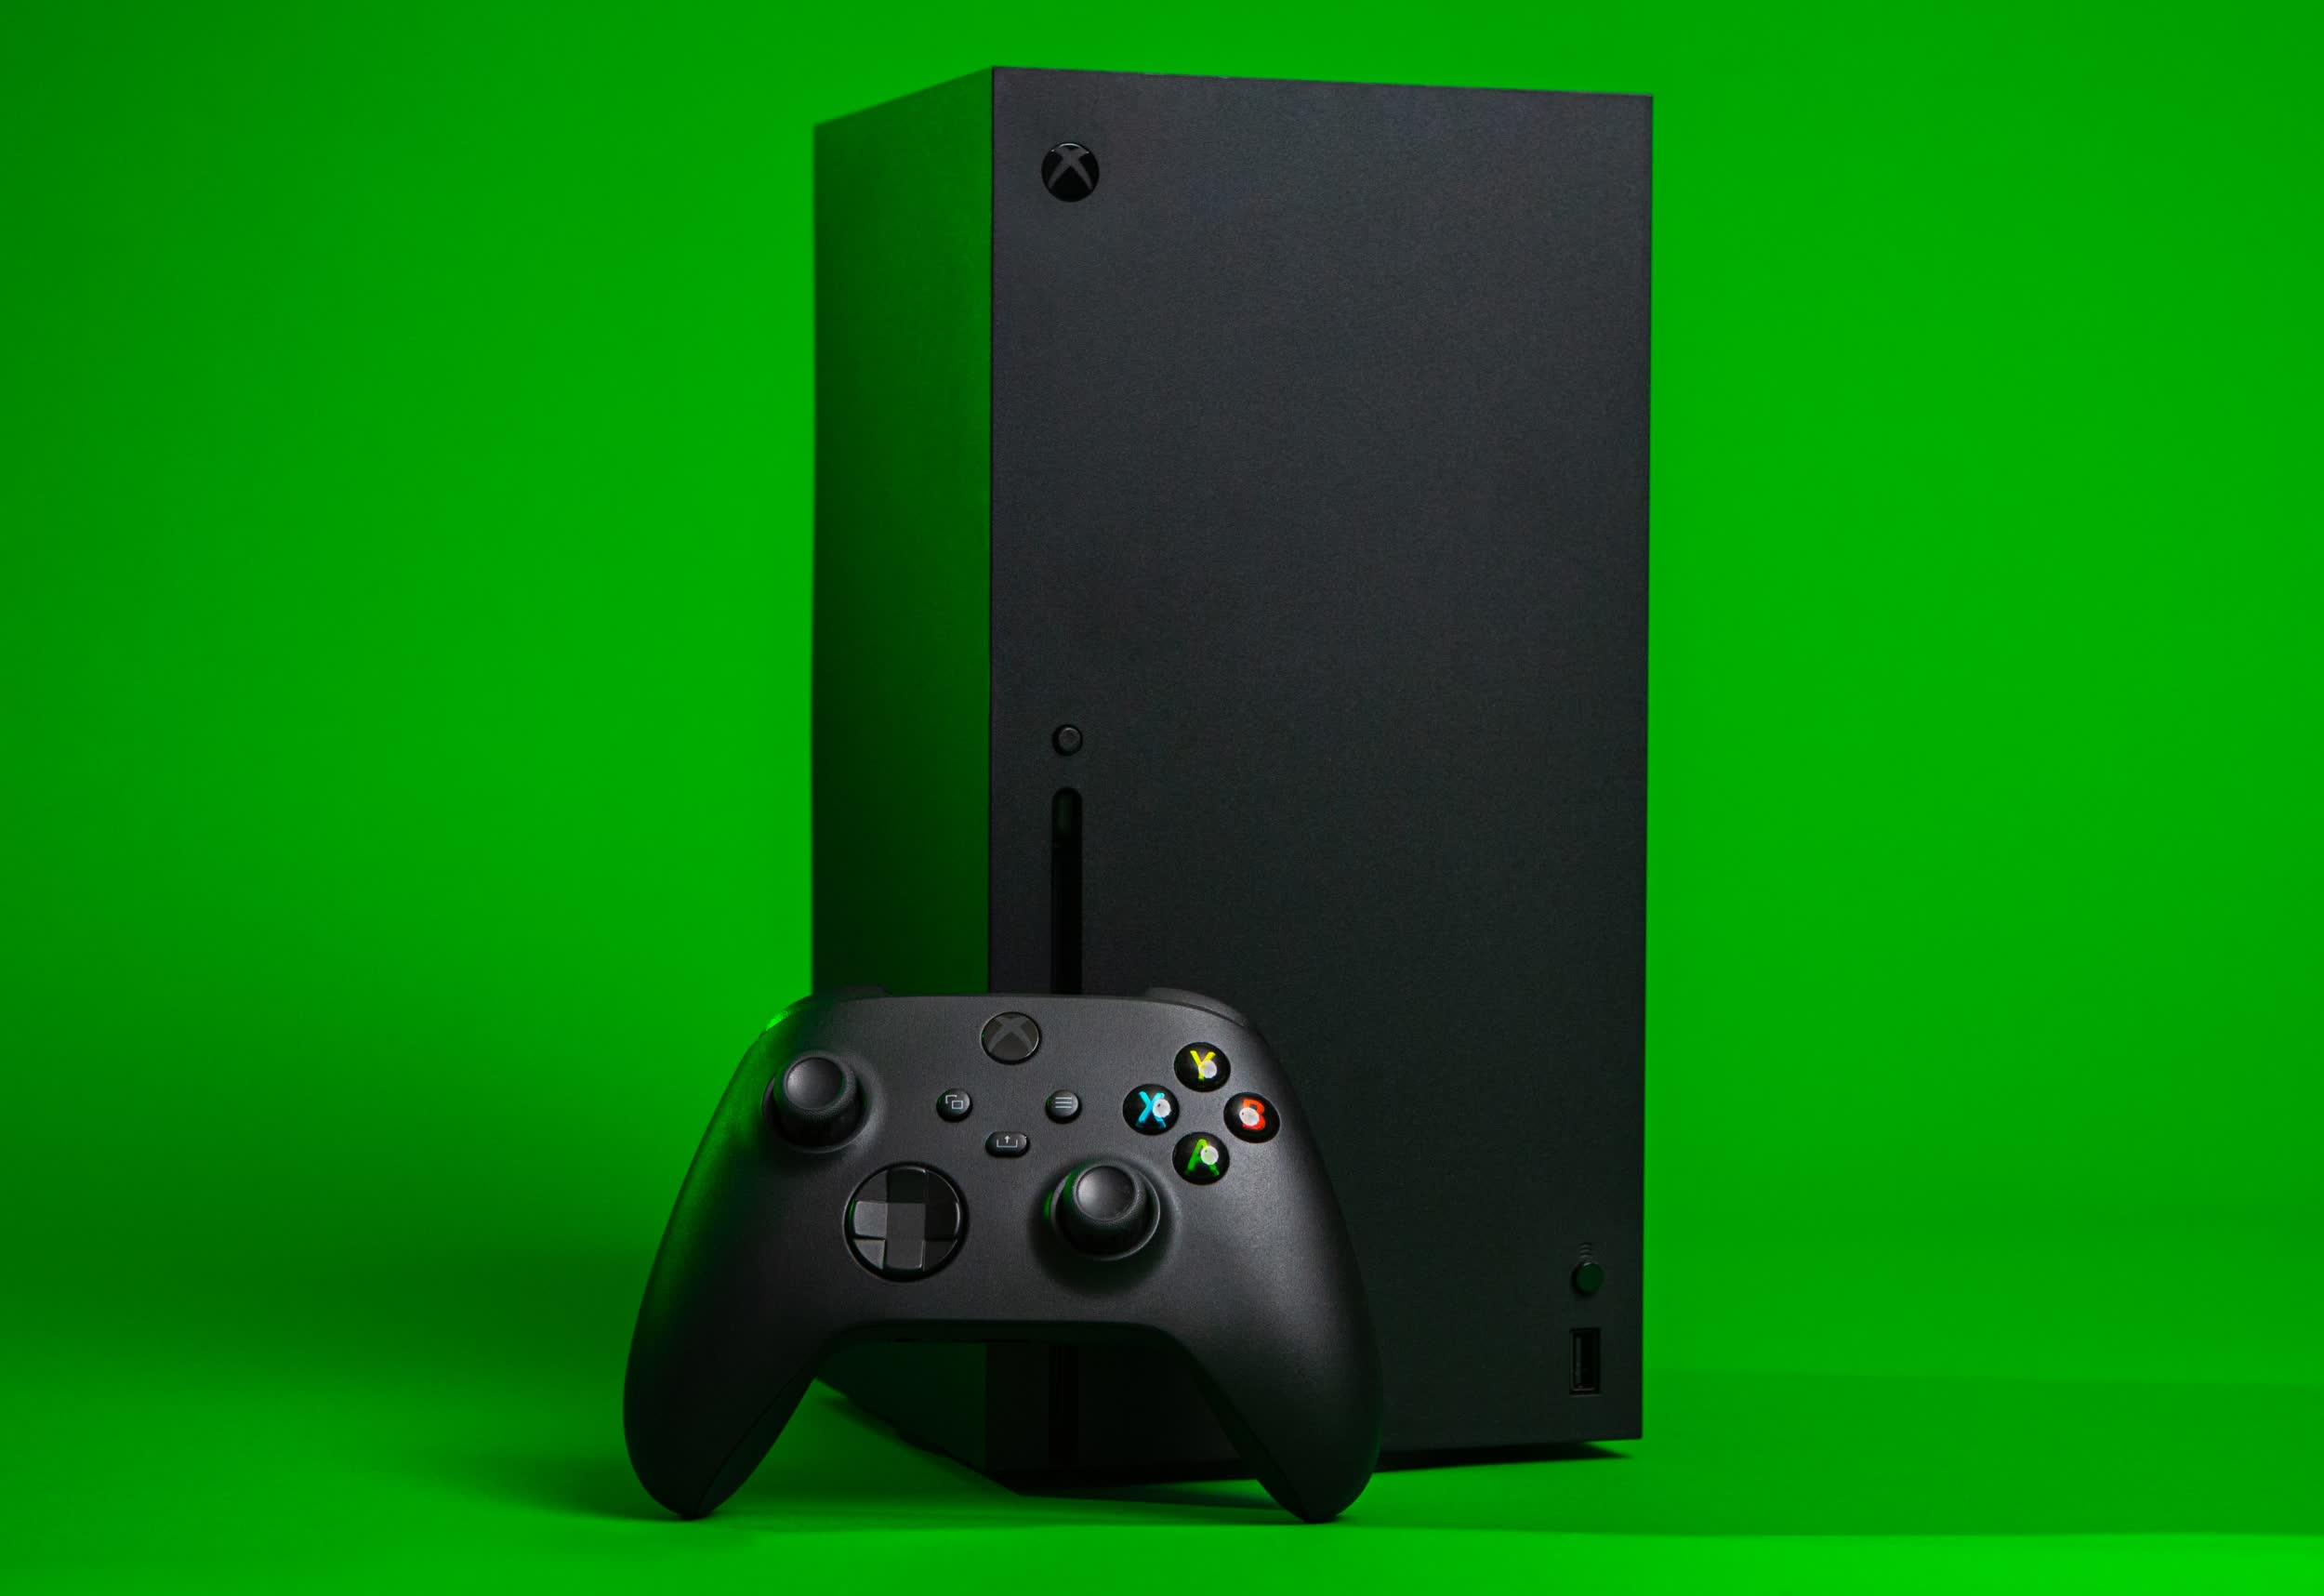 Microsoft wants to sell you a refurbished Xbox Series X bundle